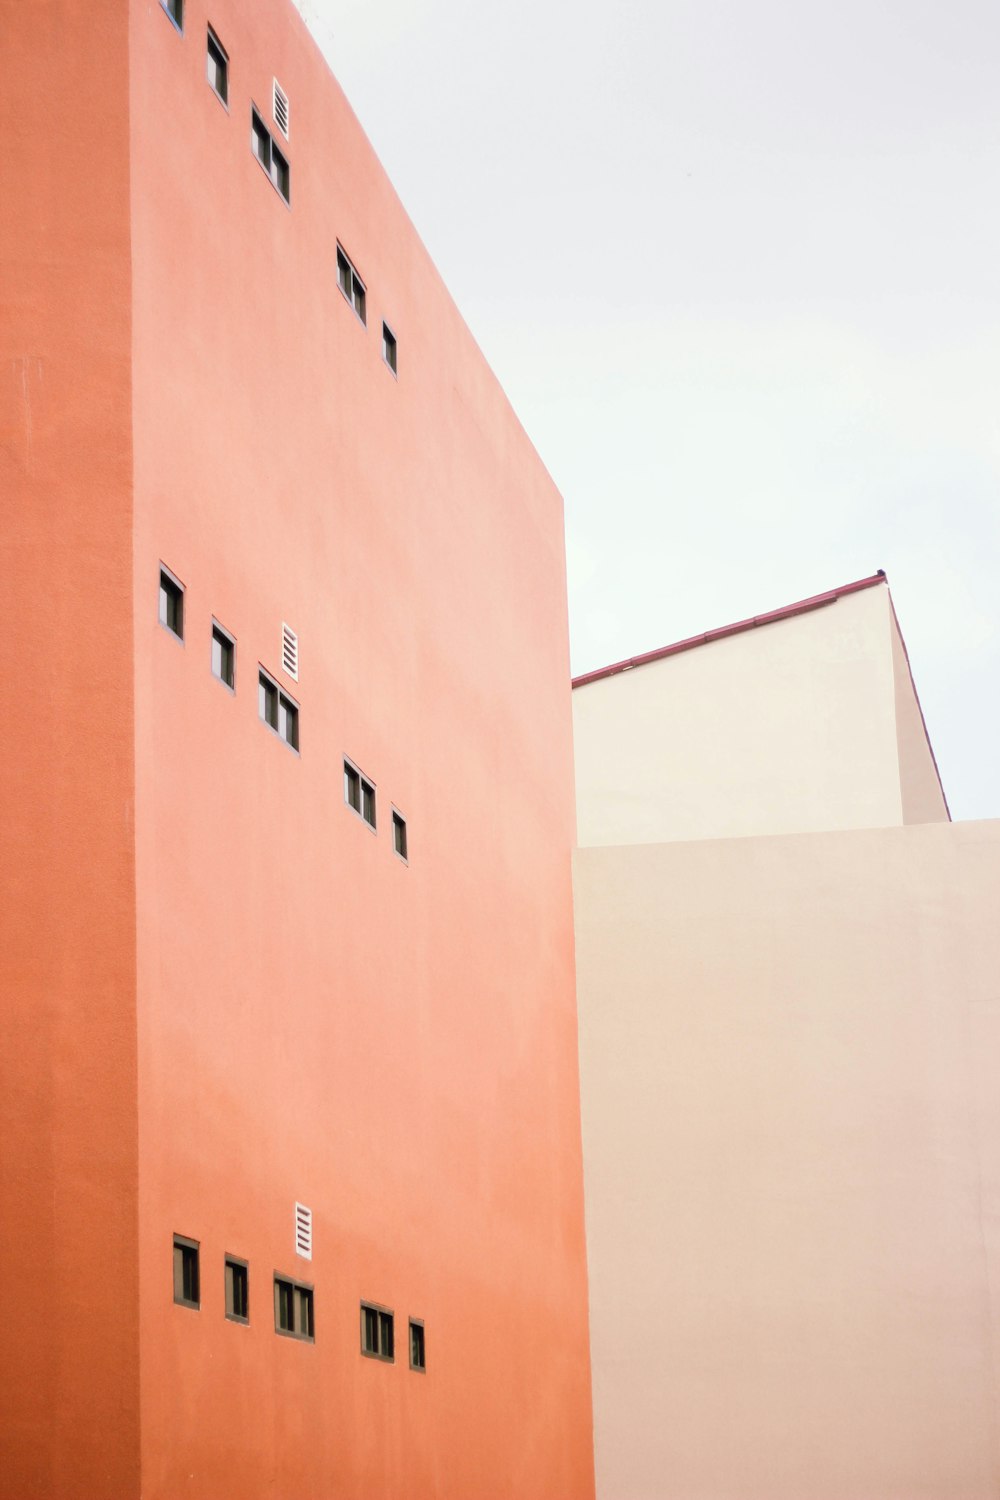 orange painted building